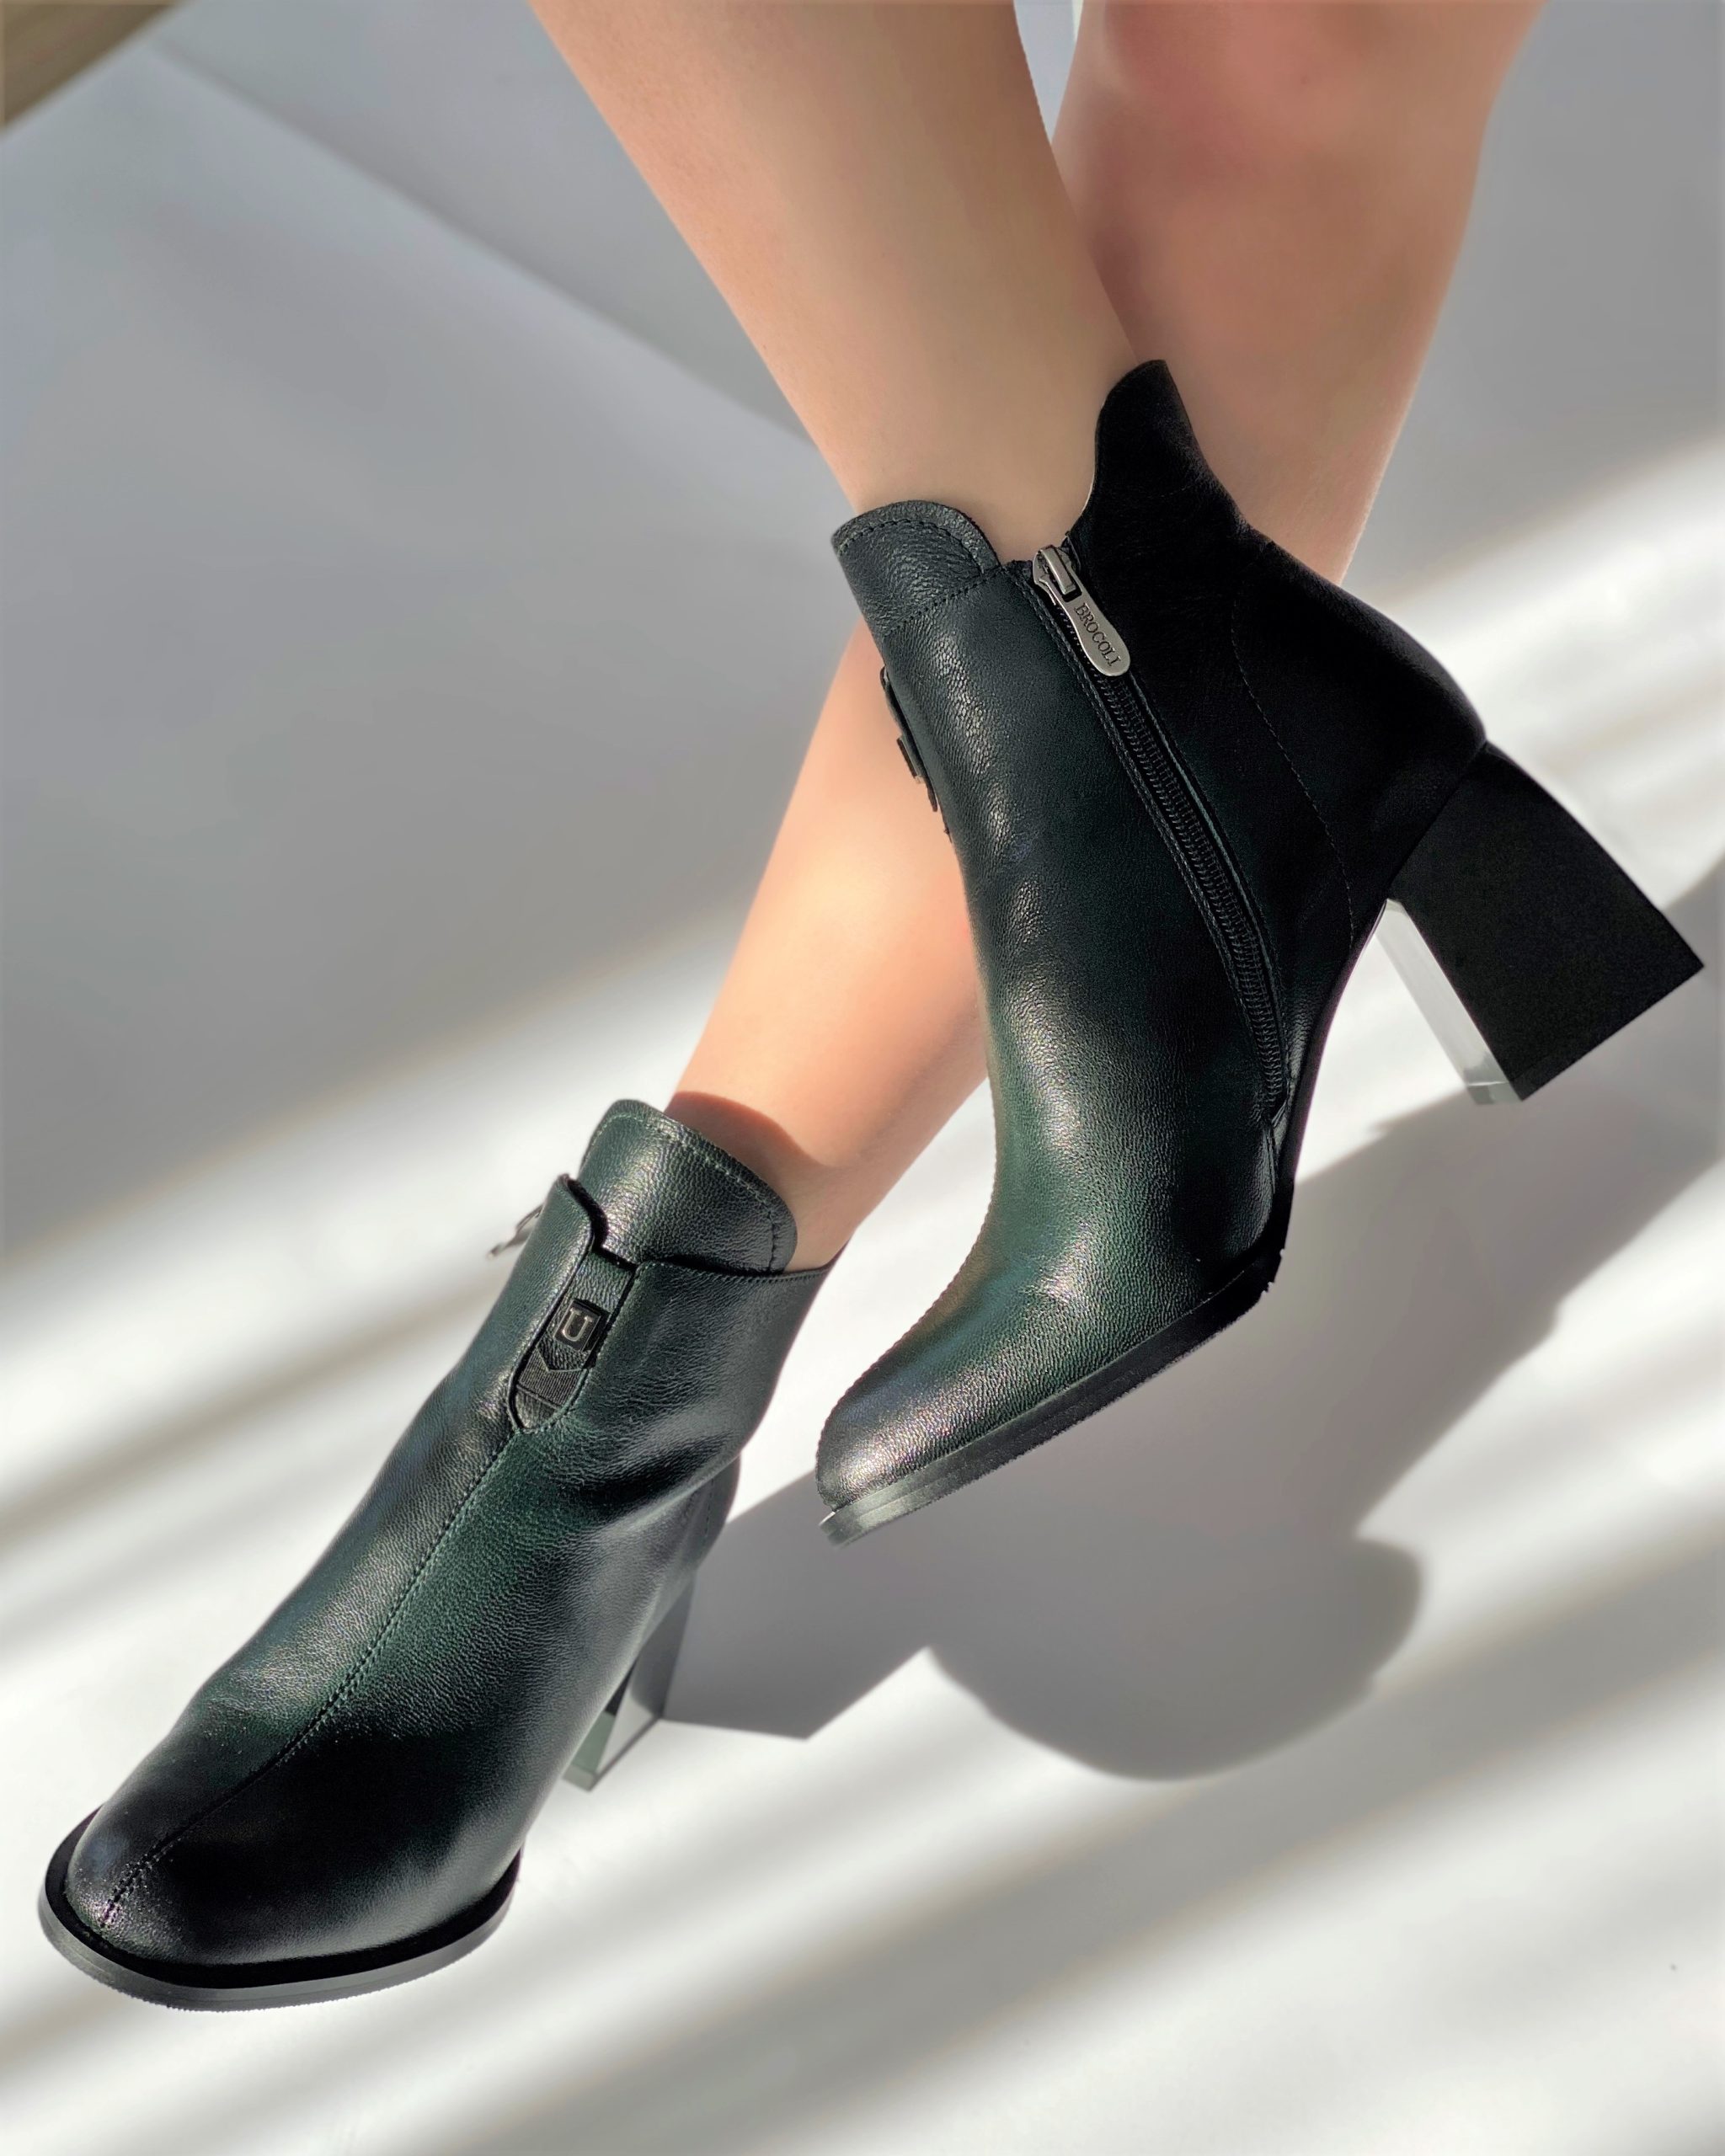 Ботинки женские весна БРОКОЛИ на каблуке - Интернет магазин обуви